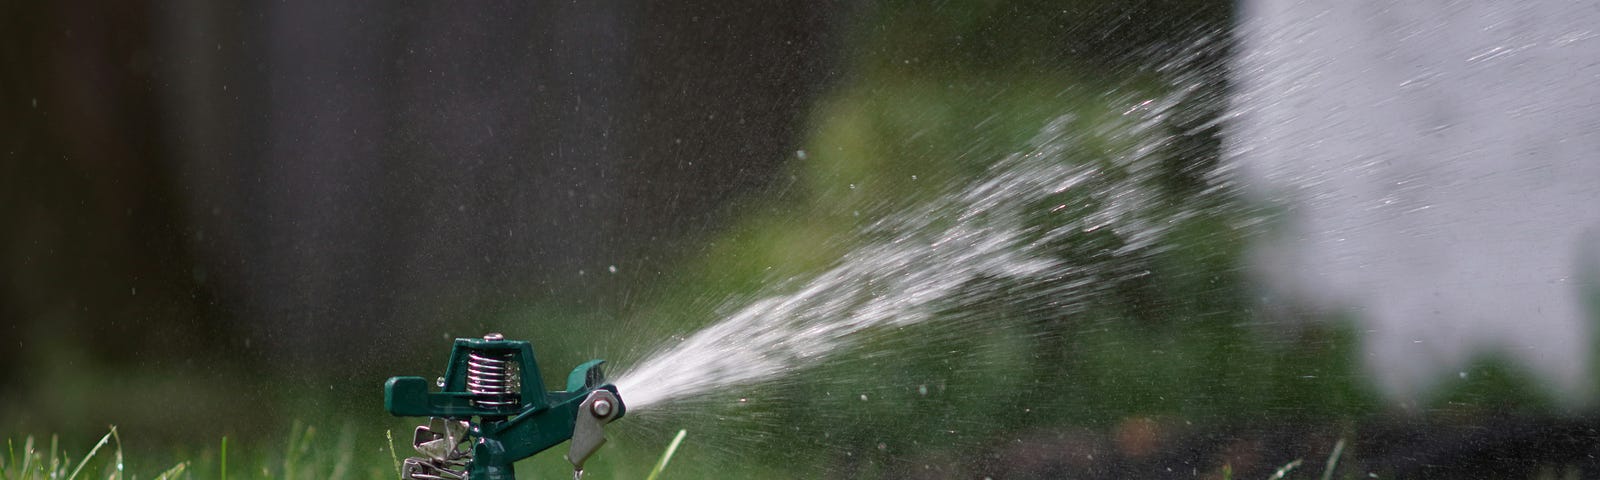 A rain bird sprinkler on the lawn.